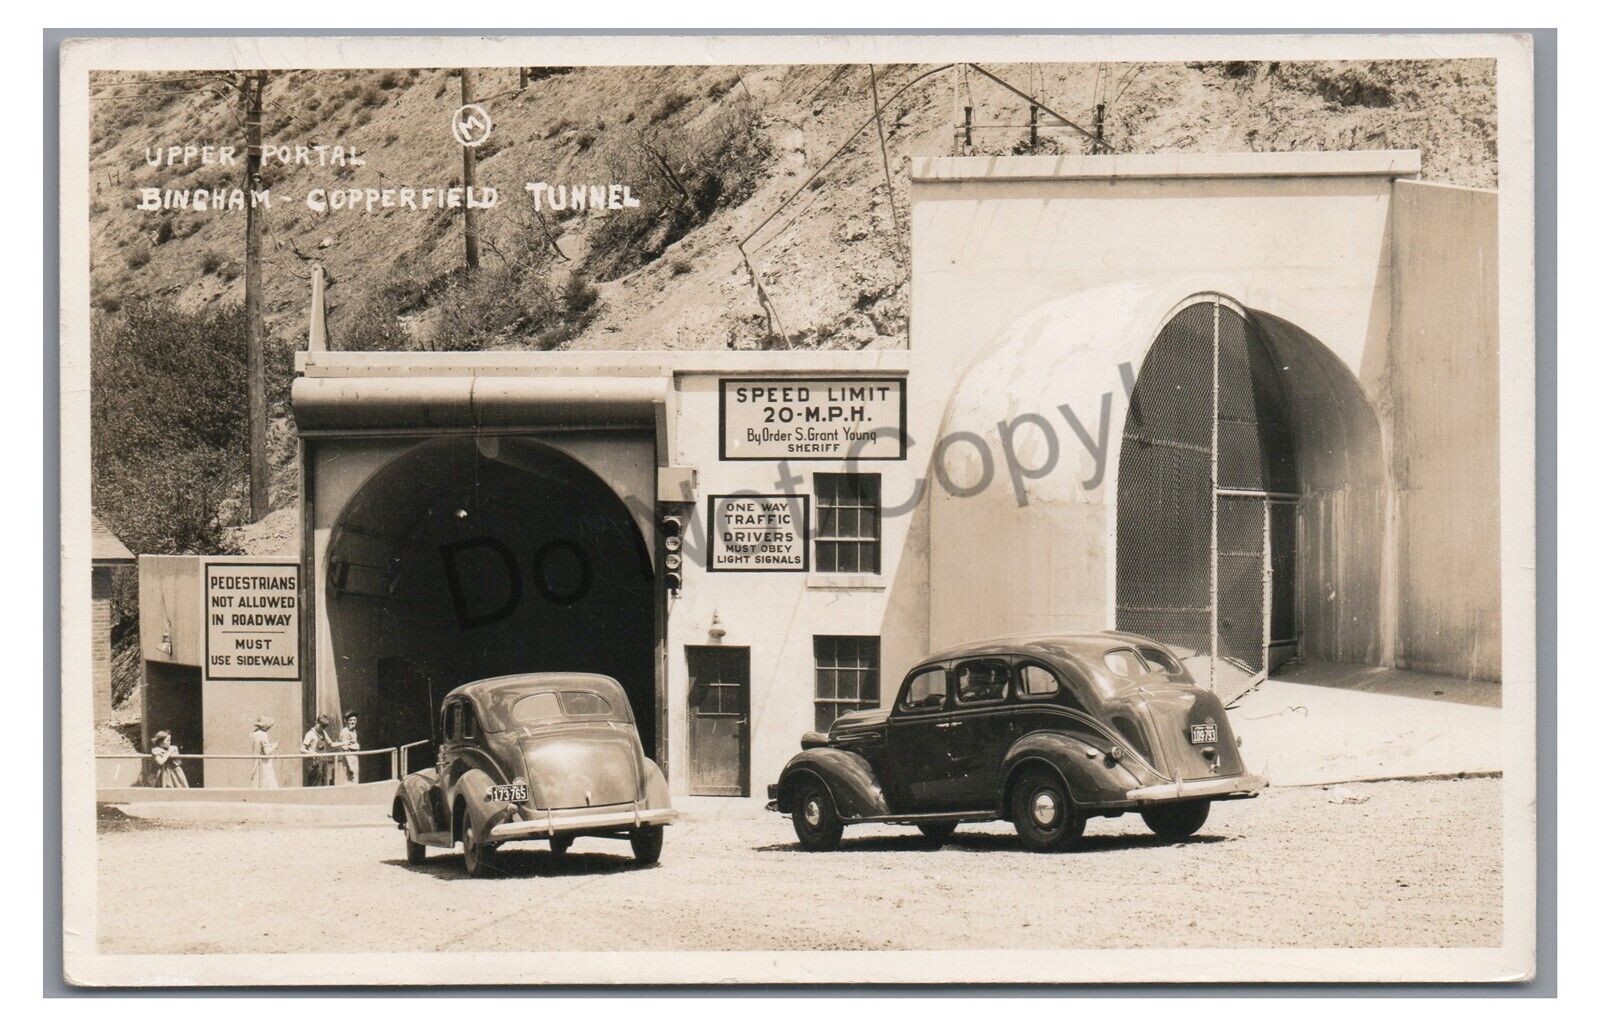 RPPC Upper Portal BINGHAM COPPERFIELD TUNNEL UT Utah Vintage Real Photo Postcard